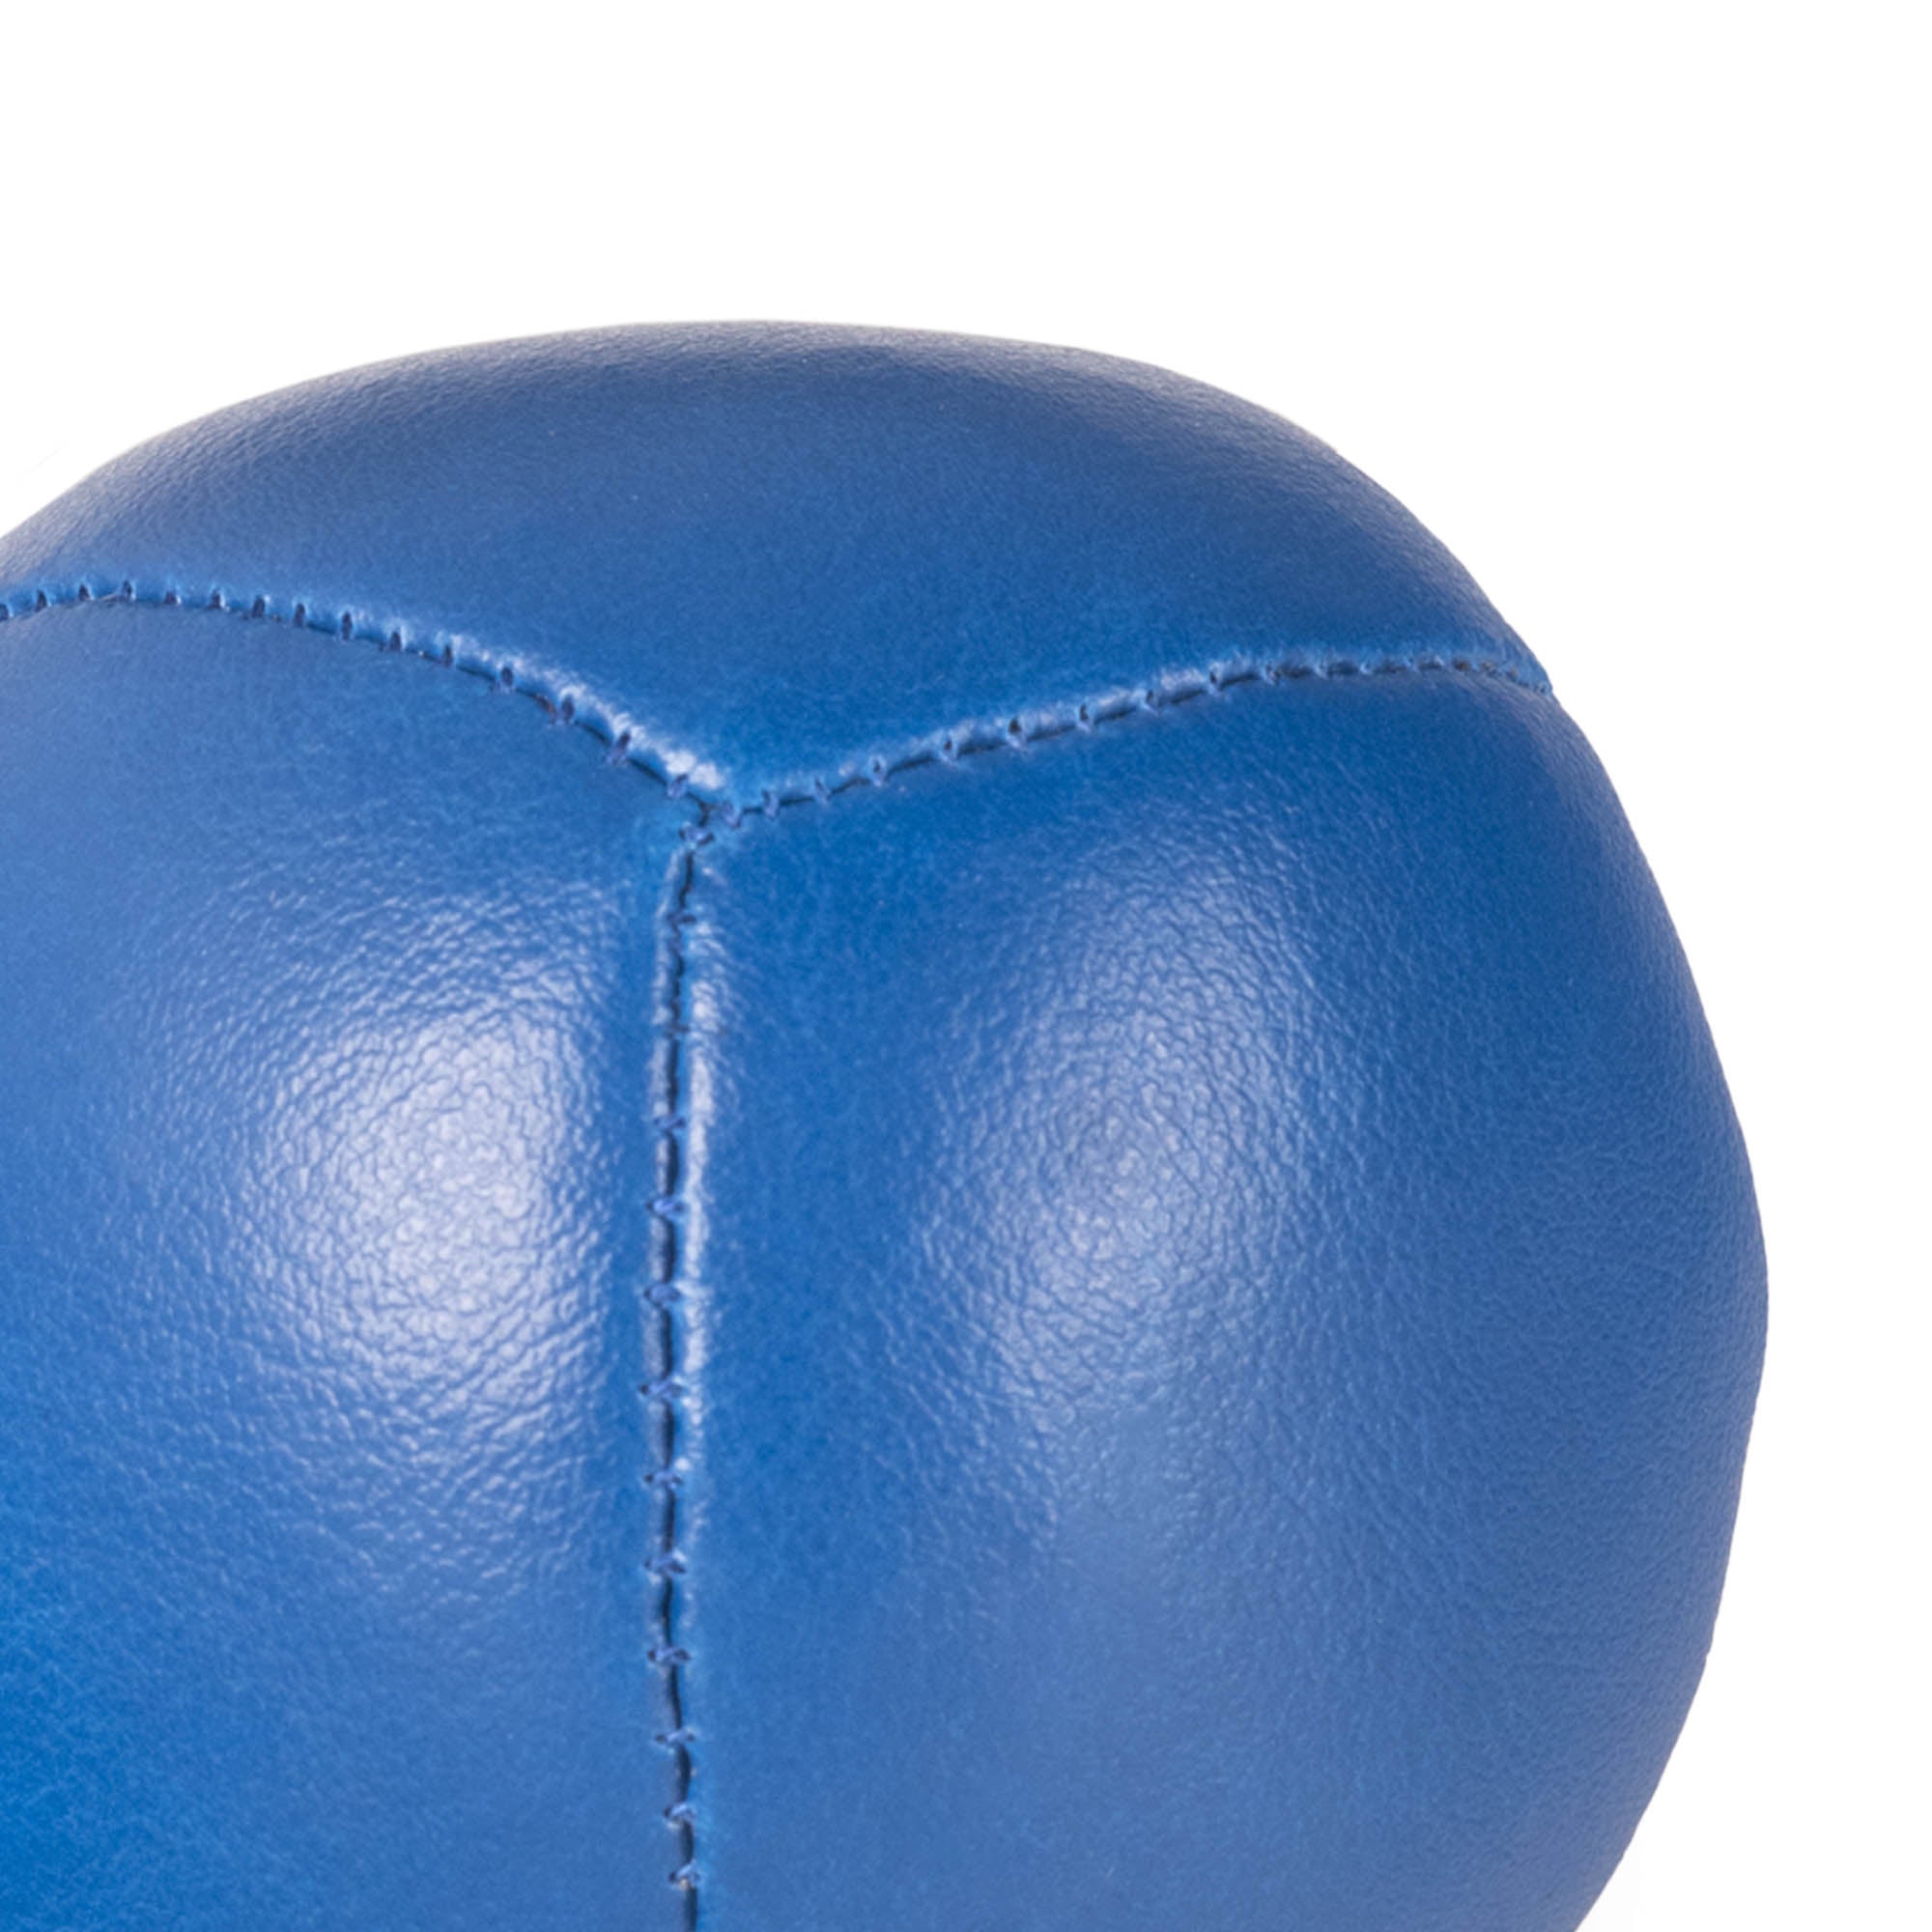 Firetoys 110g thud juggling ball, close up stitching blue